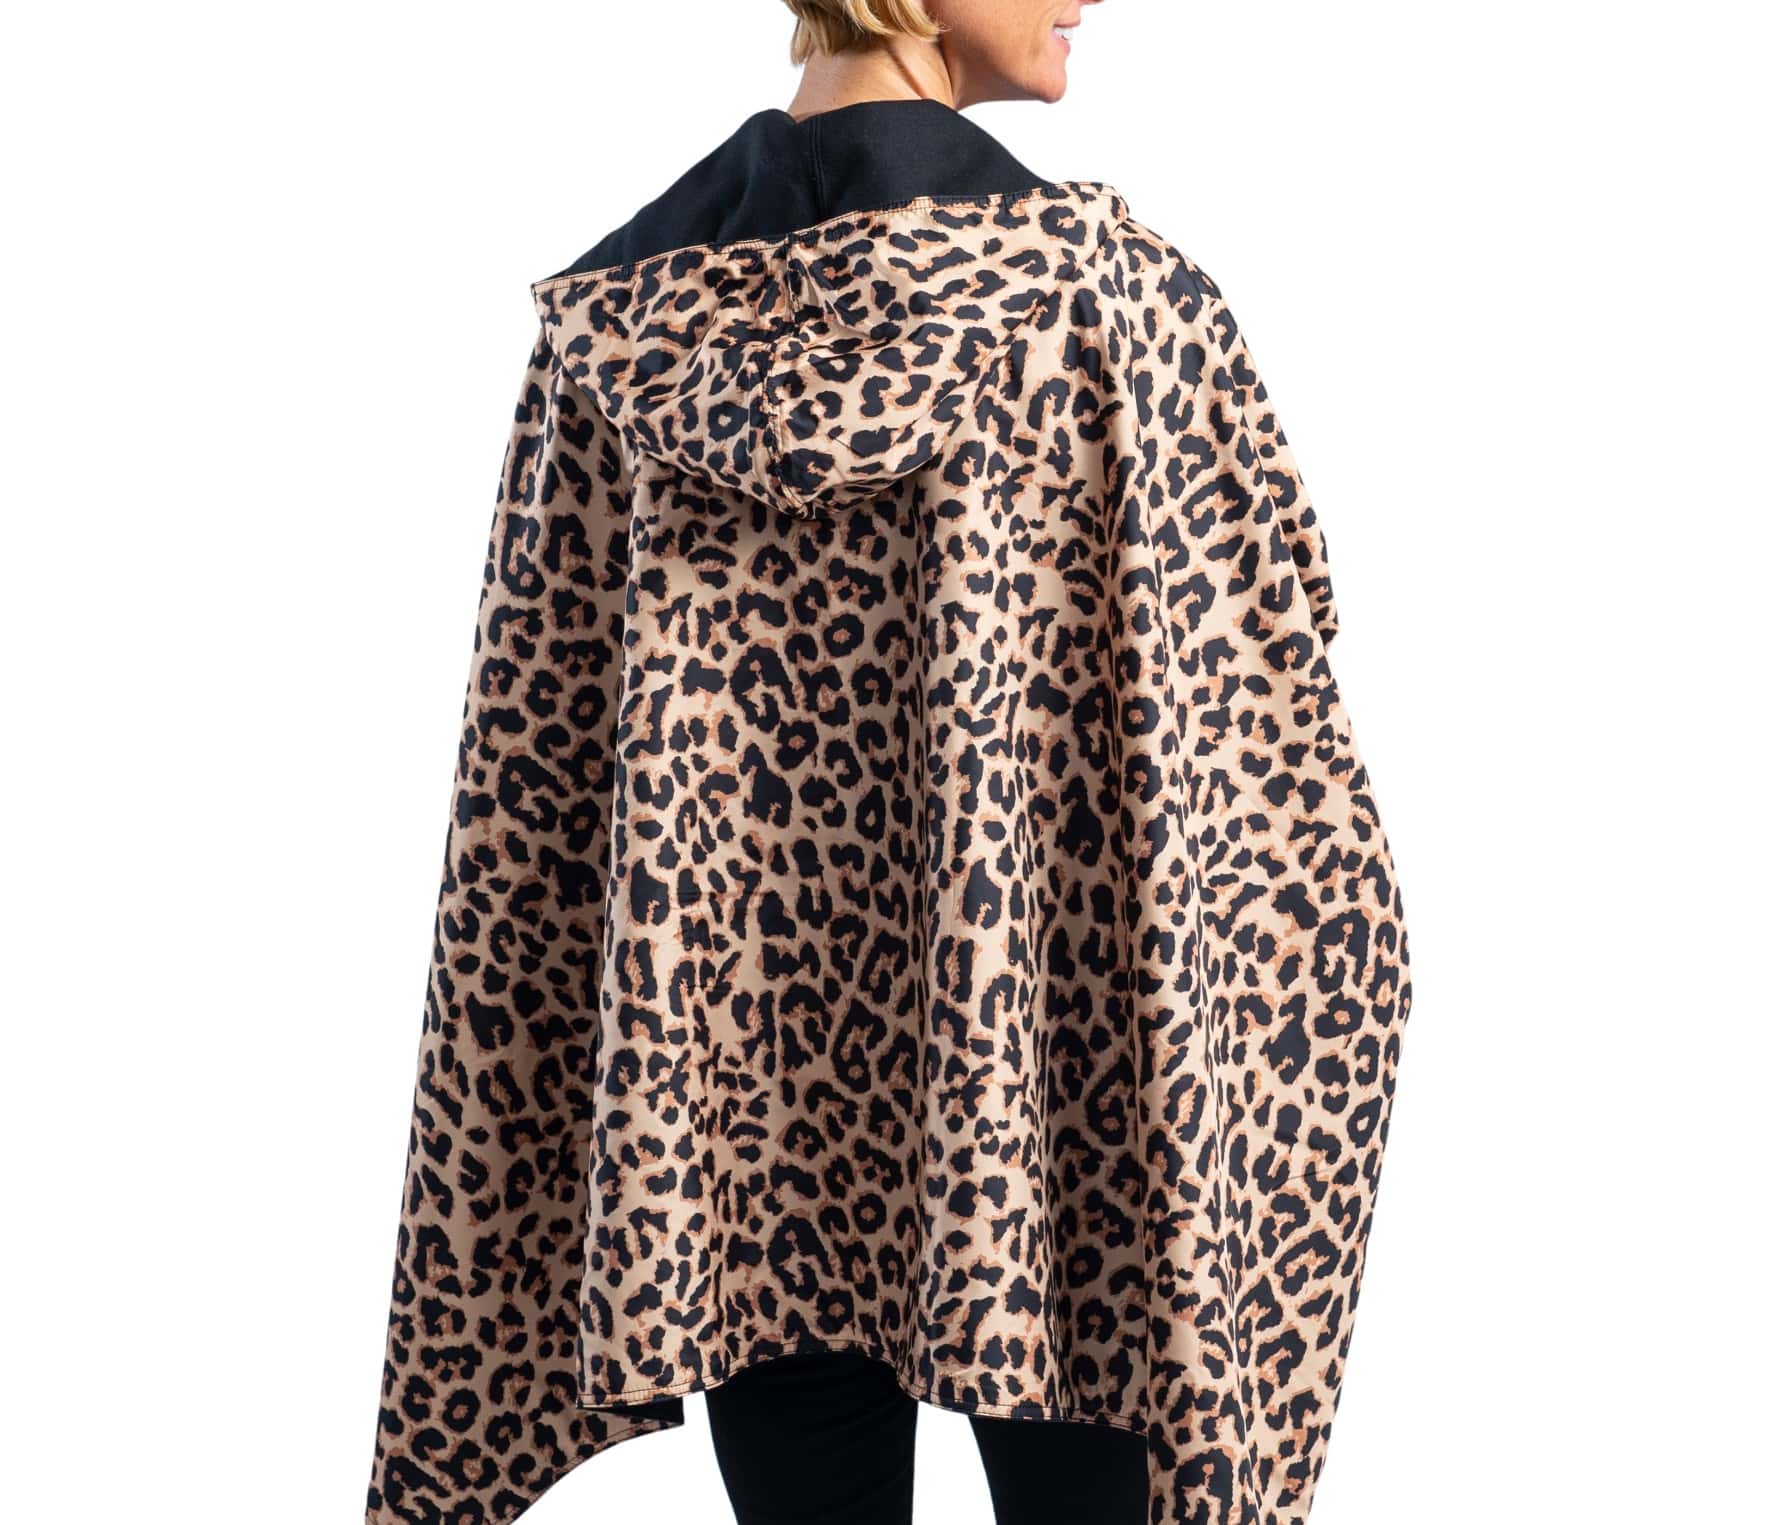 Woman wearing a WarmCaper Warm Black & Rainproof Leopard lined rain and travel cape by RainCaper.